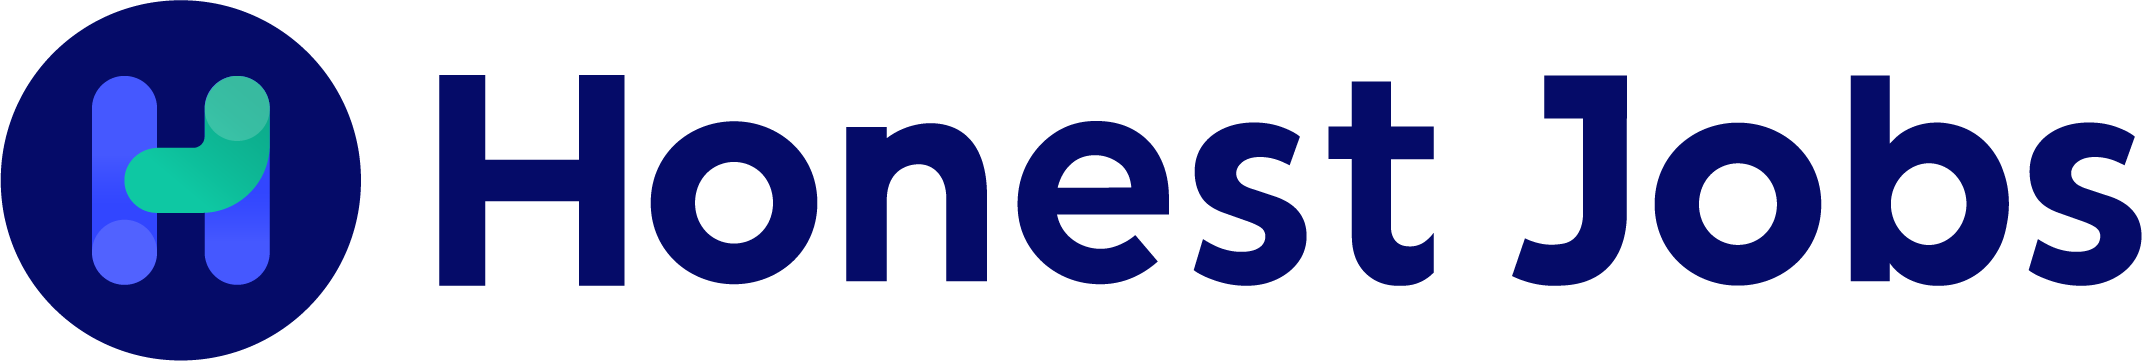 Honest Jobs logo